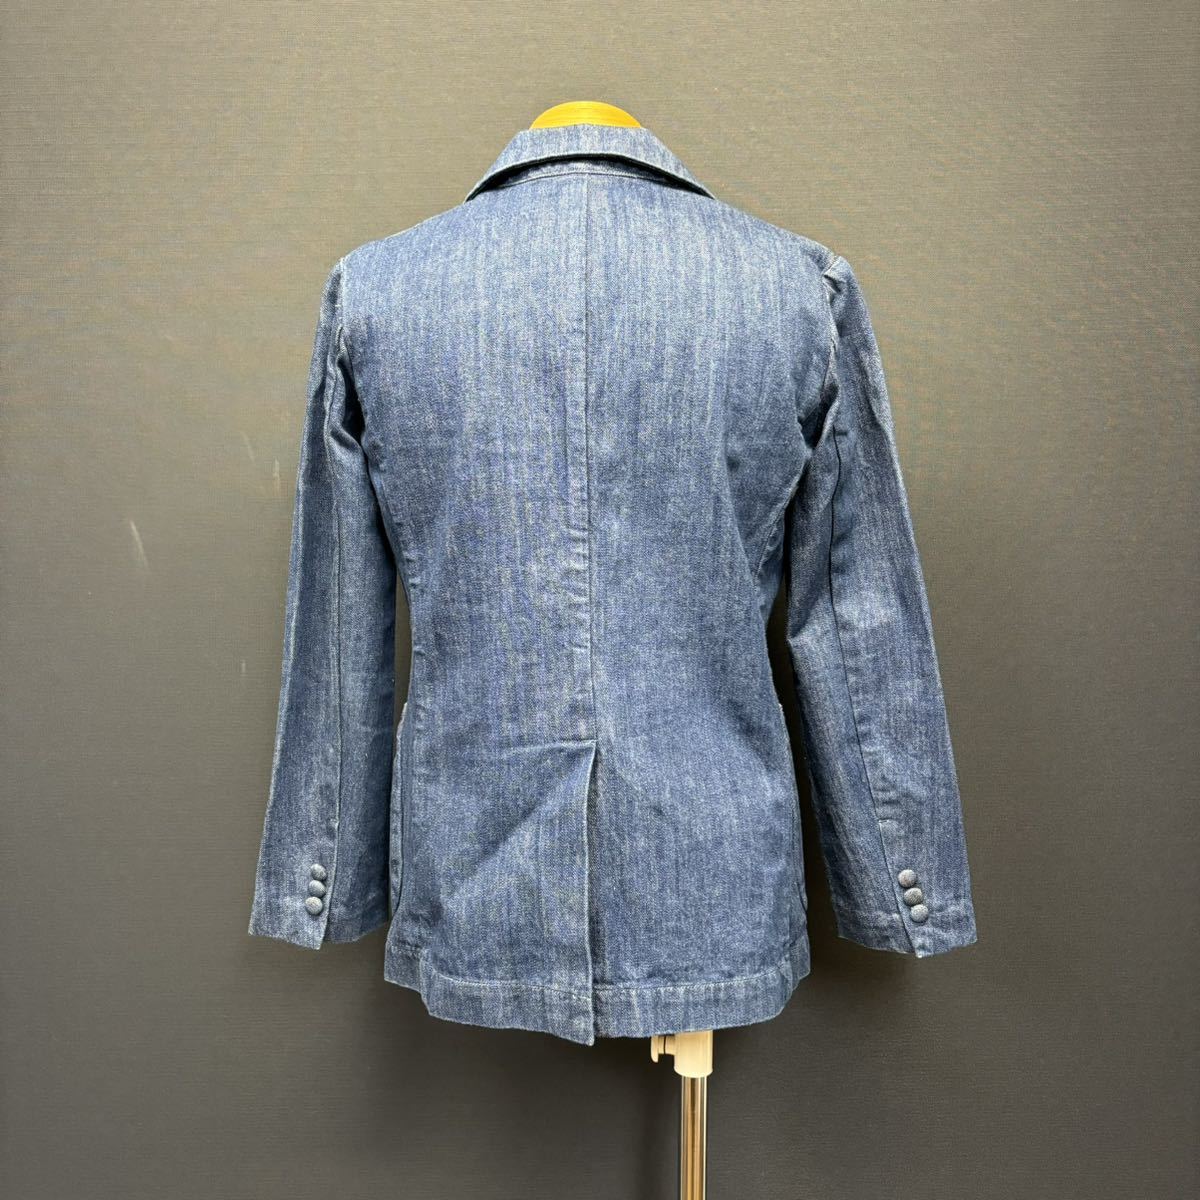 EVISU Madison Jacket Evisu Madison jacket size 32 indigo /b lumen z outer 